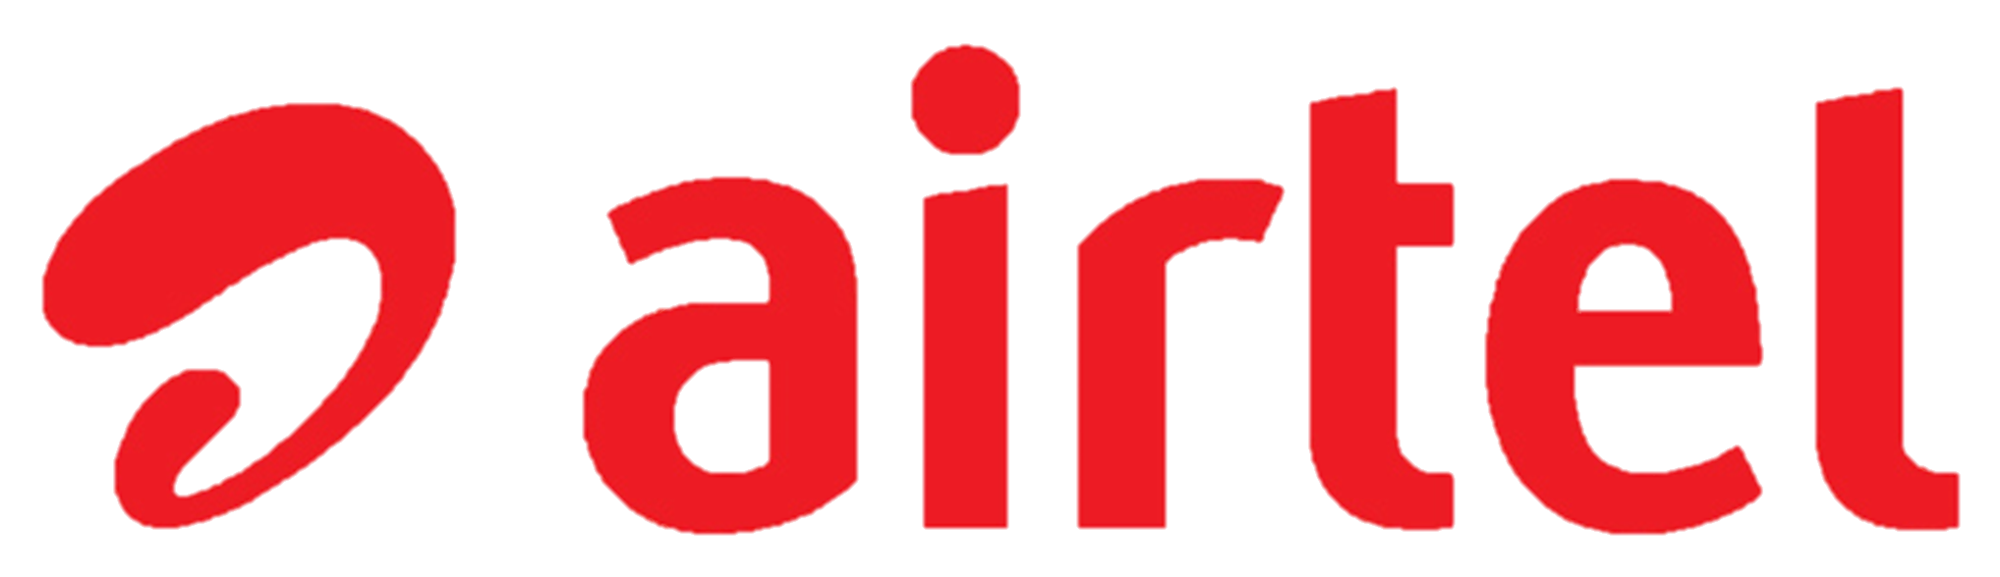 DDF Exclusive - Raftaar Media, Aadinath will be added tonight on Airtel  Digital TV | DreamDTH Forums - Television Discussion Community